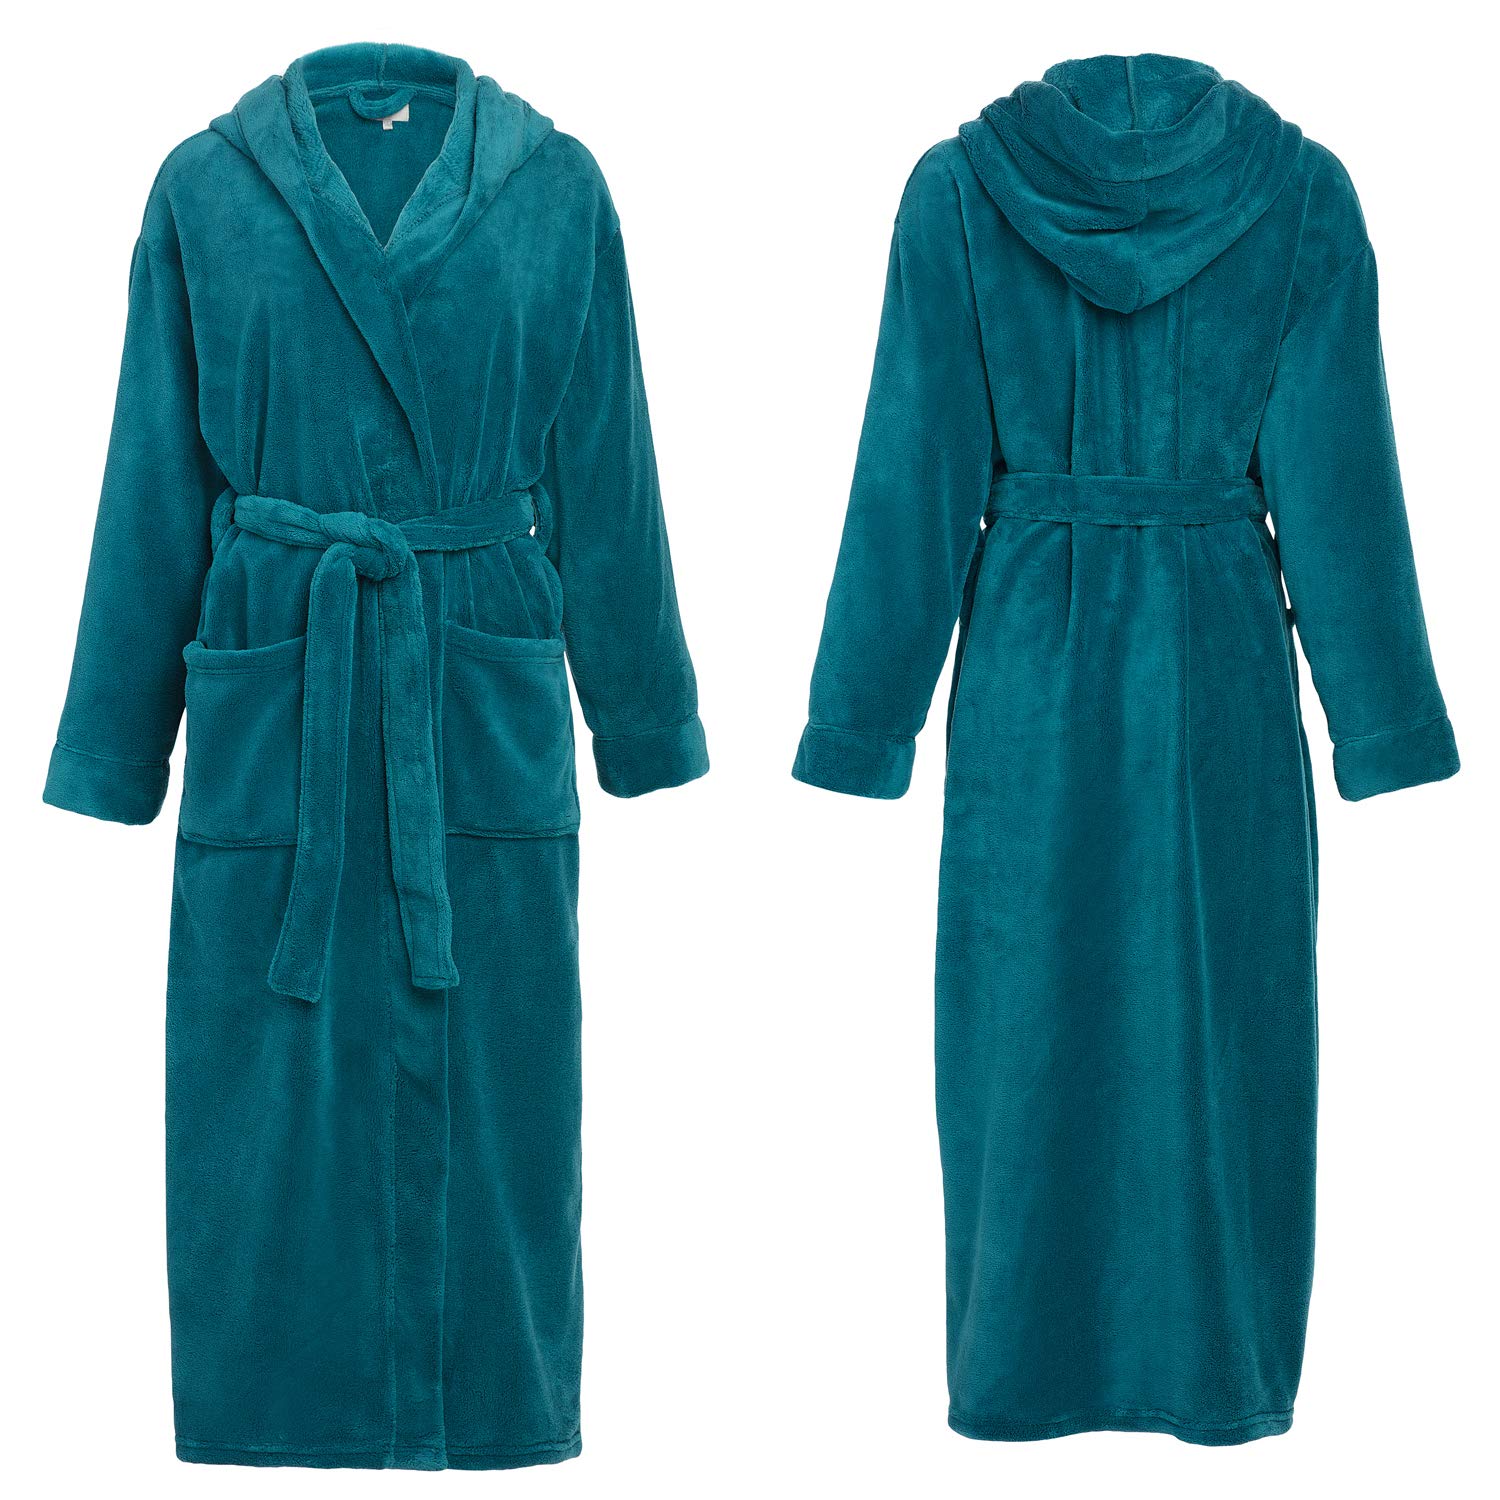 Alexander Del Rossa Bath Robes for Women, Long Hooded Plush Female Bathrobe, Regular and Plus Size, Christmas Gifts for Women